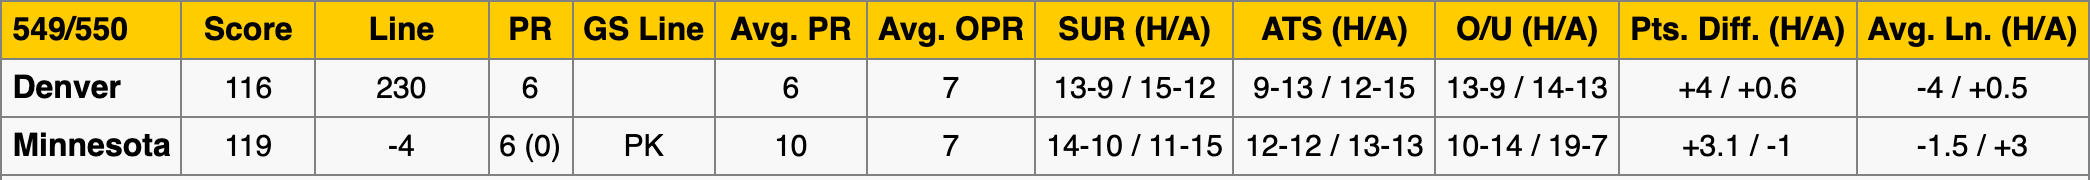 Denver Nuggets vs Minnesota Timberwolves Stats